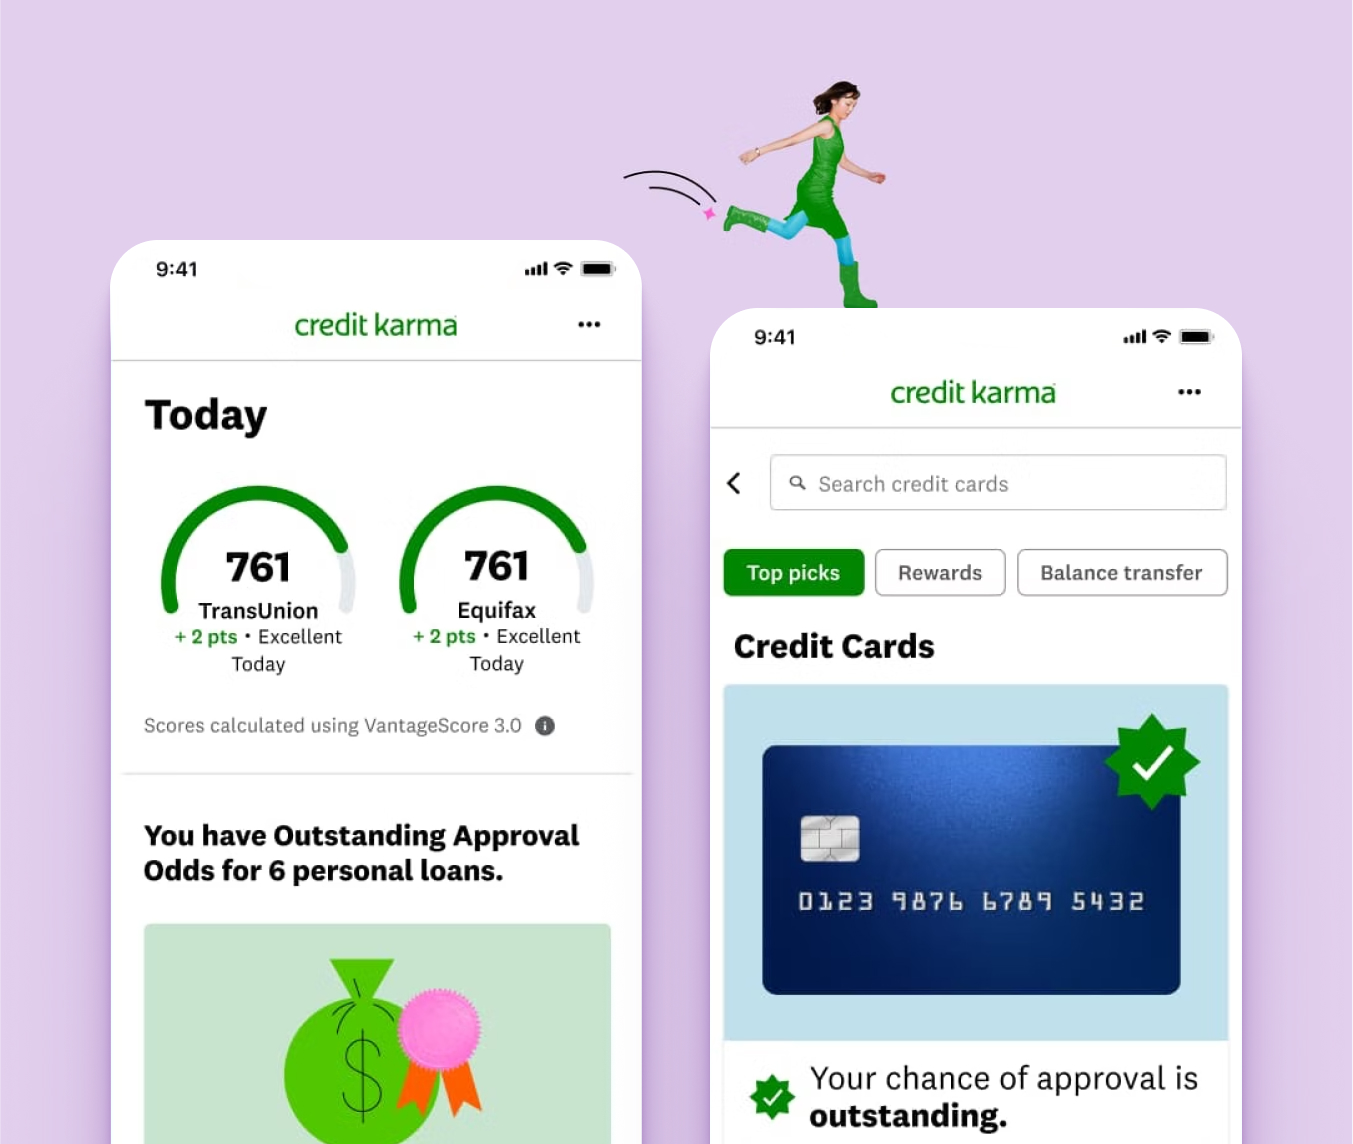 UI internationalization for Credit Karma’s mobile app interface.